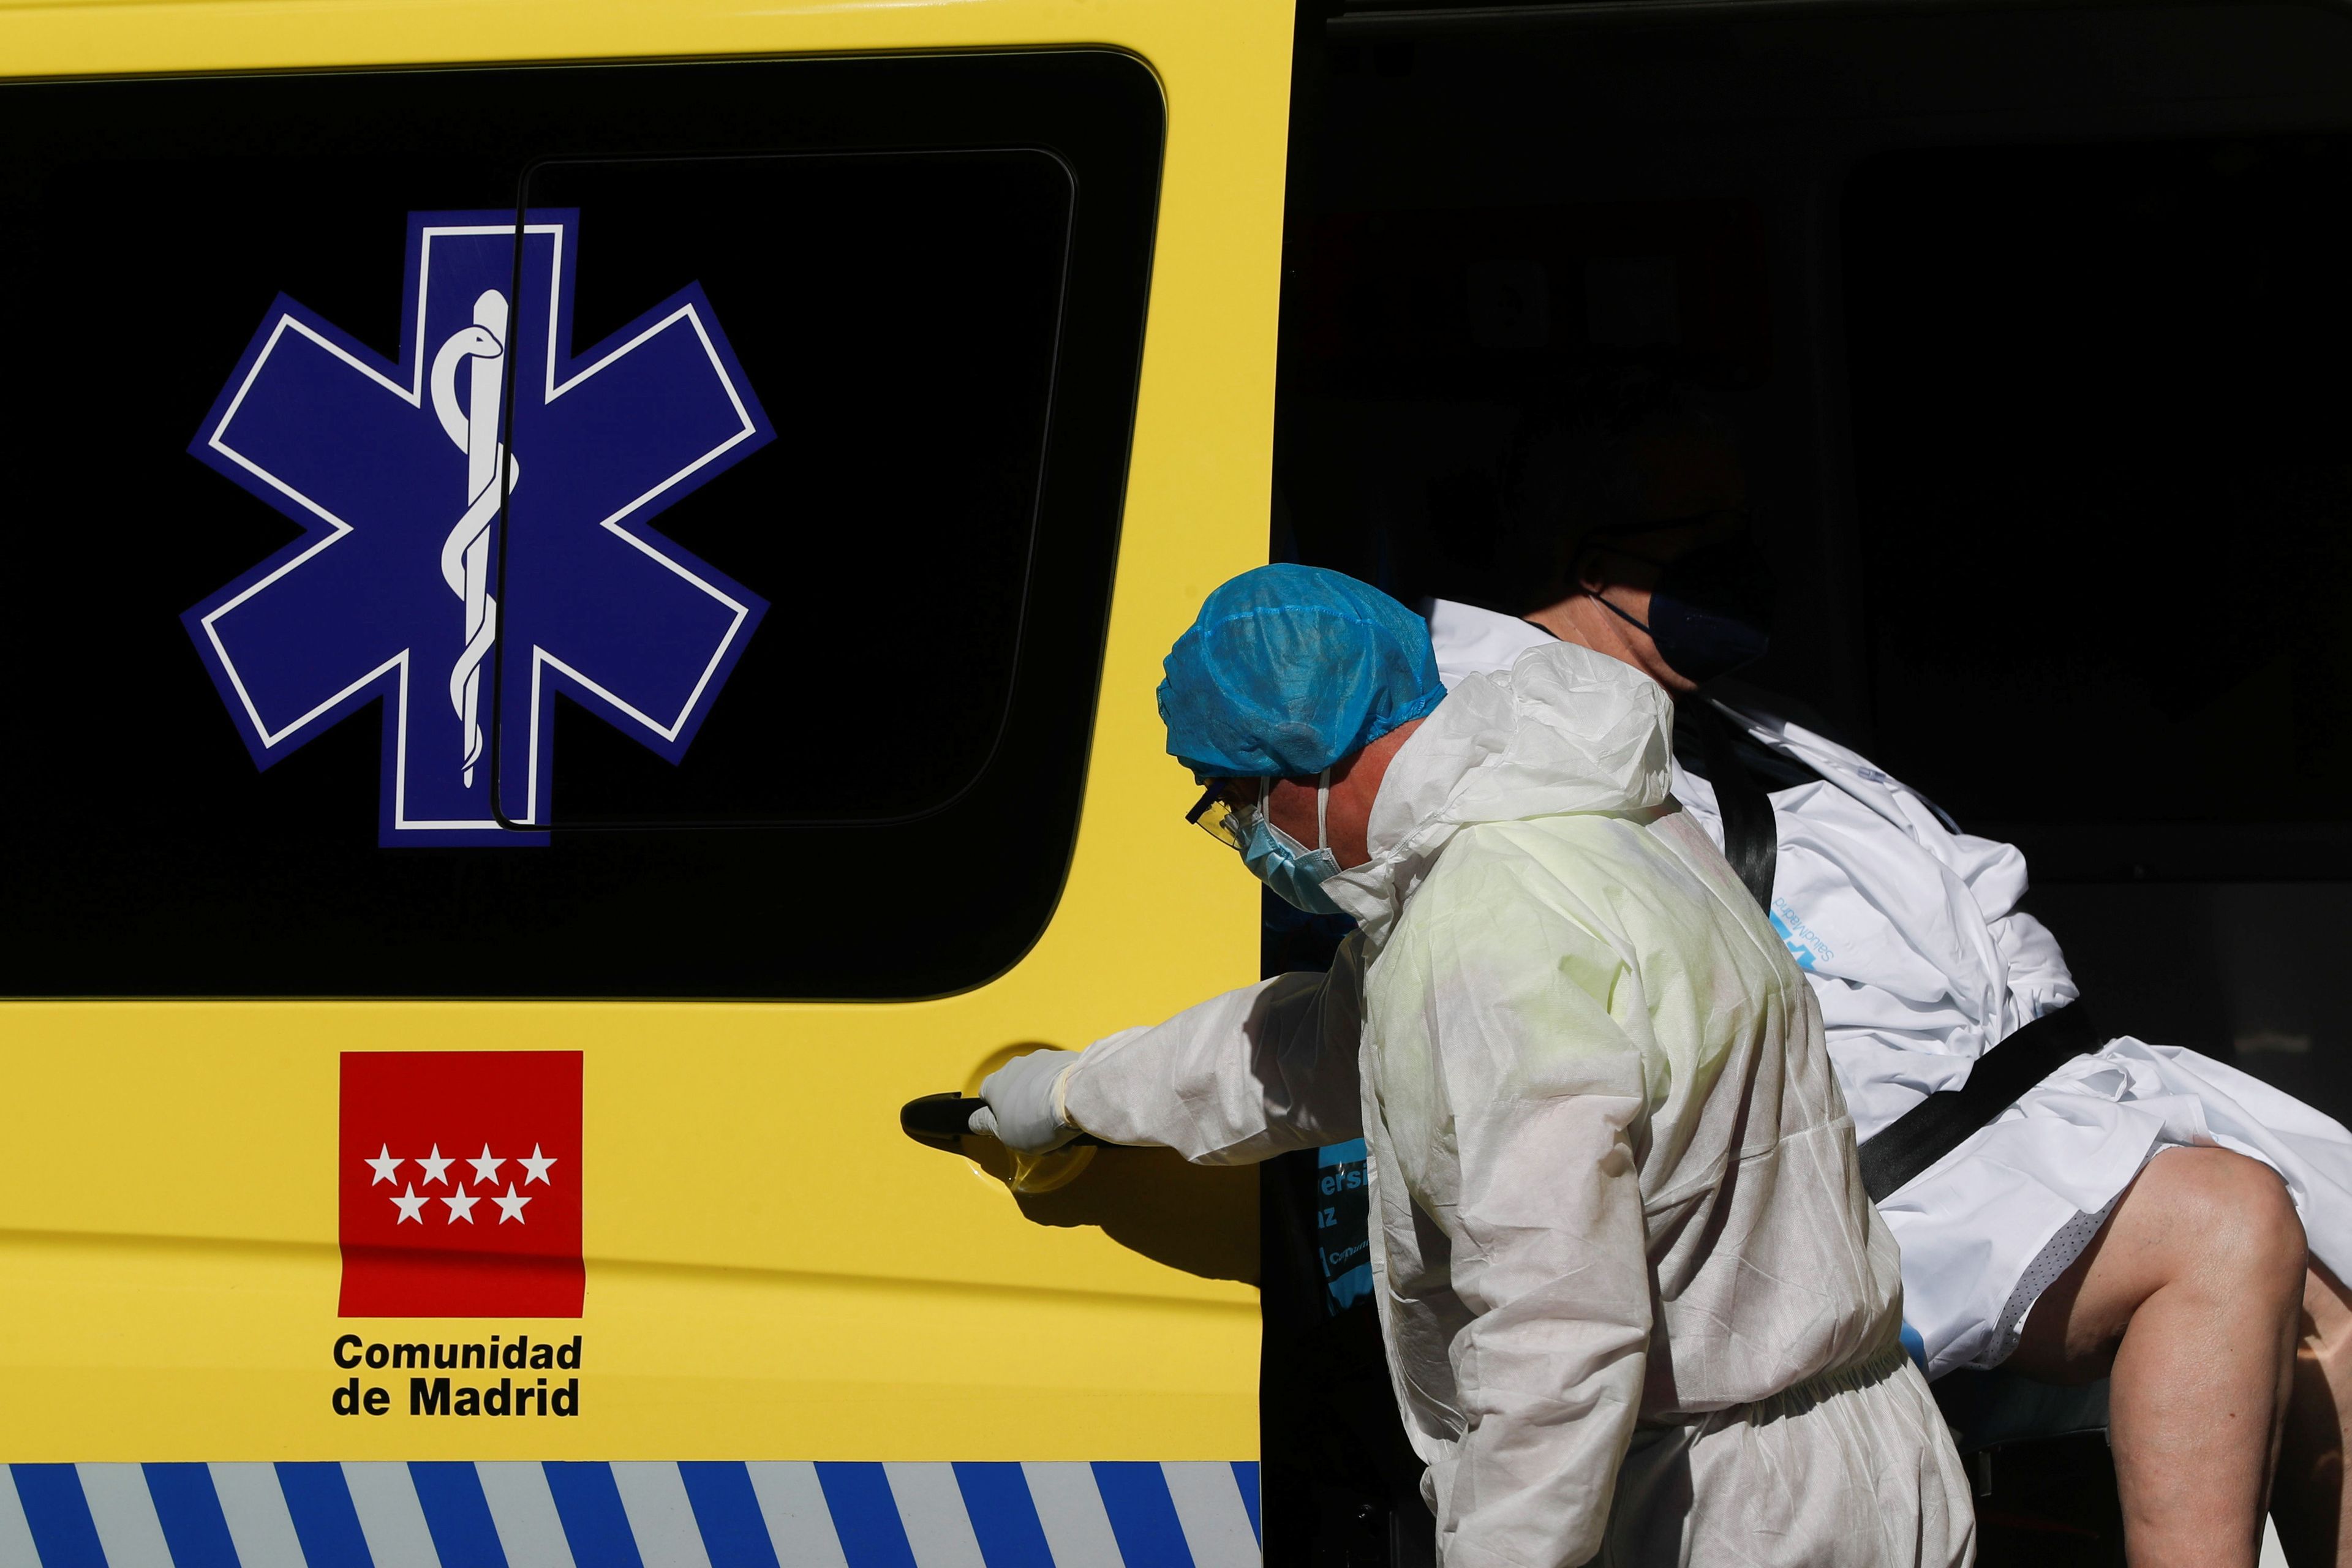 Ambulancia de la Comunidad de Madrid.